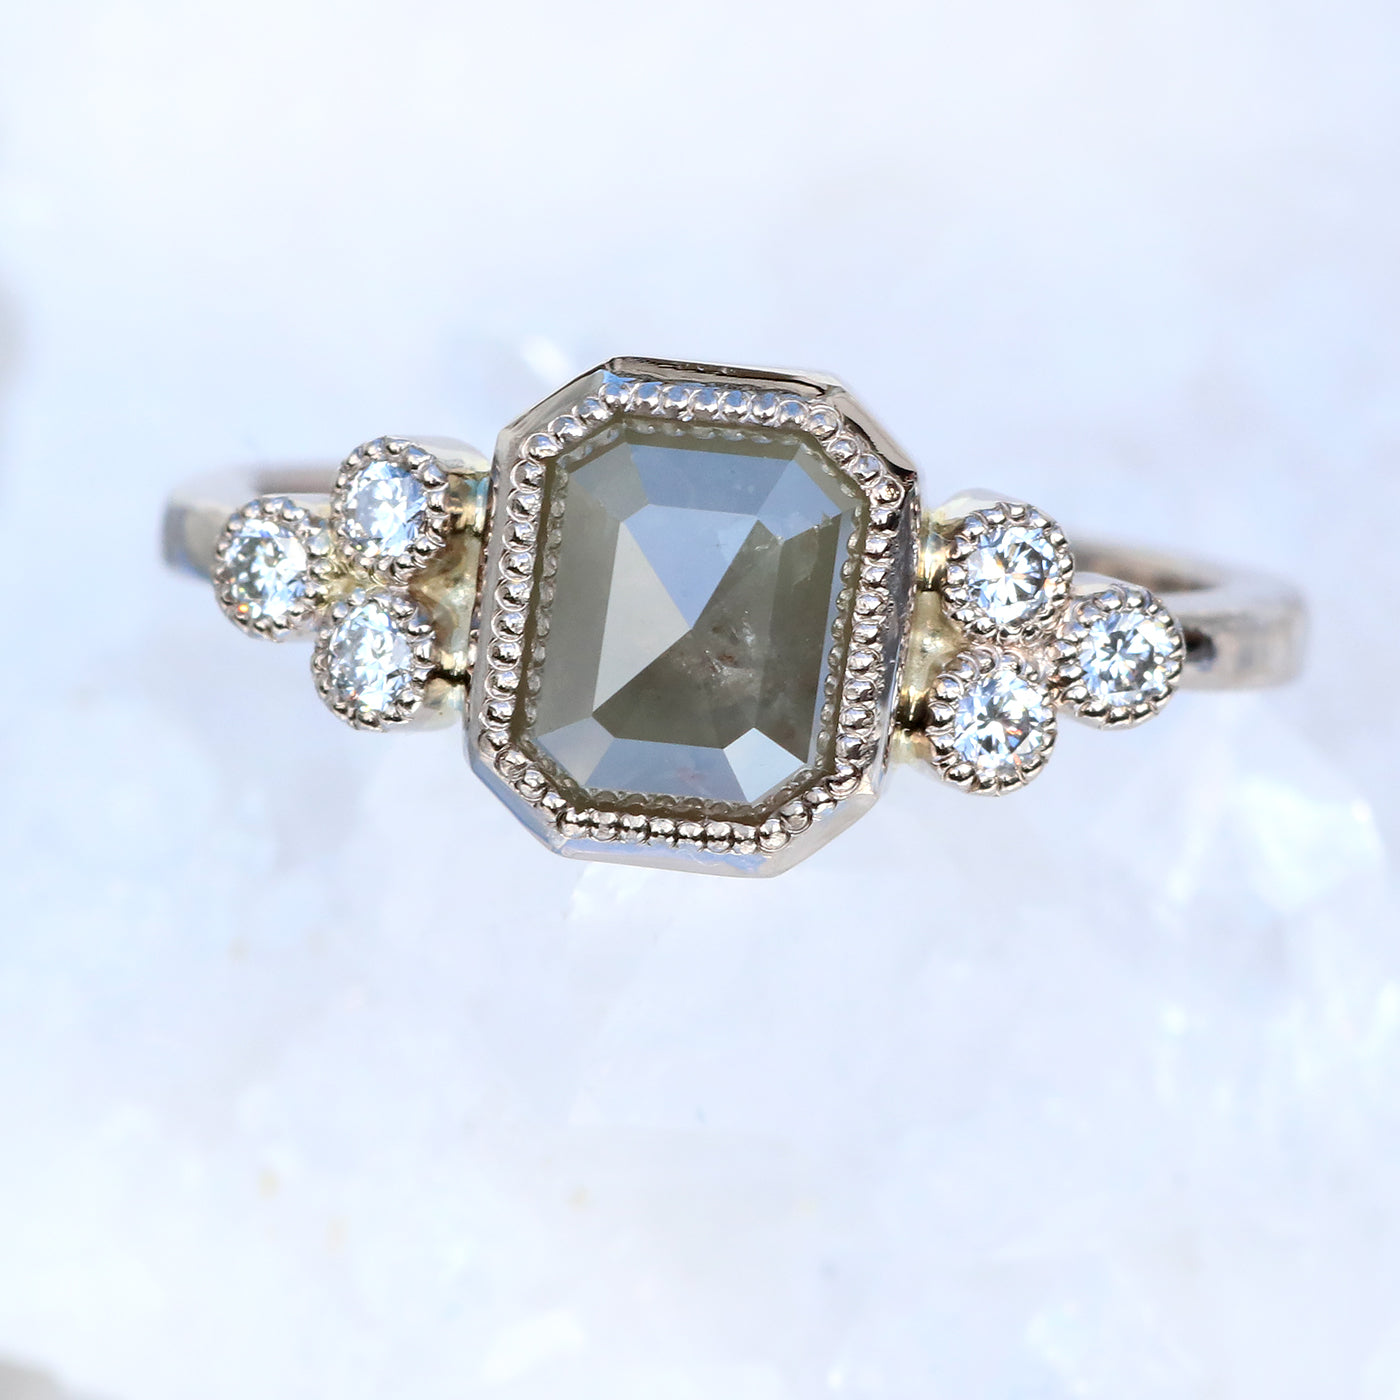 Bespoke diamond engagement ring